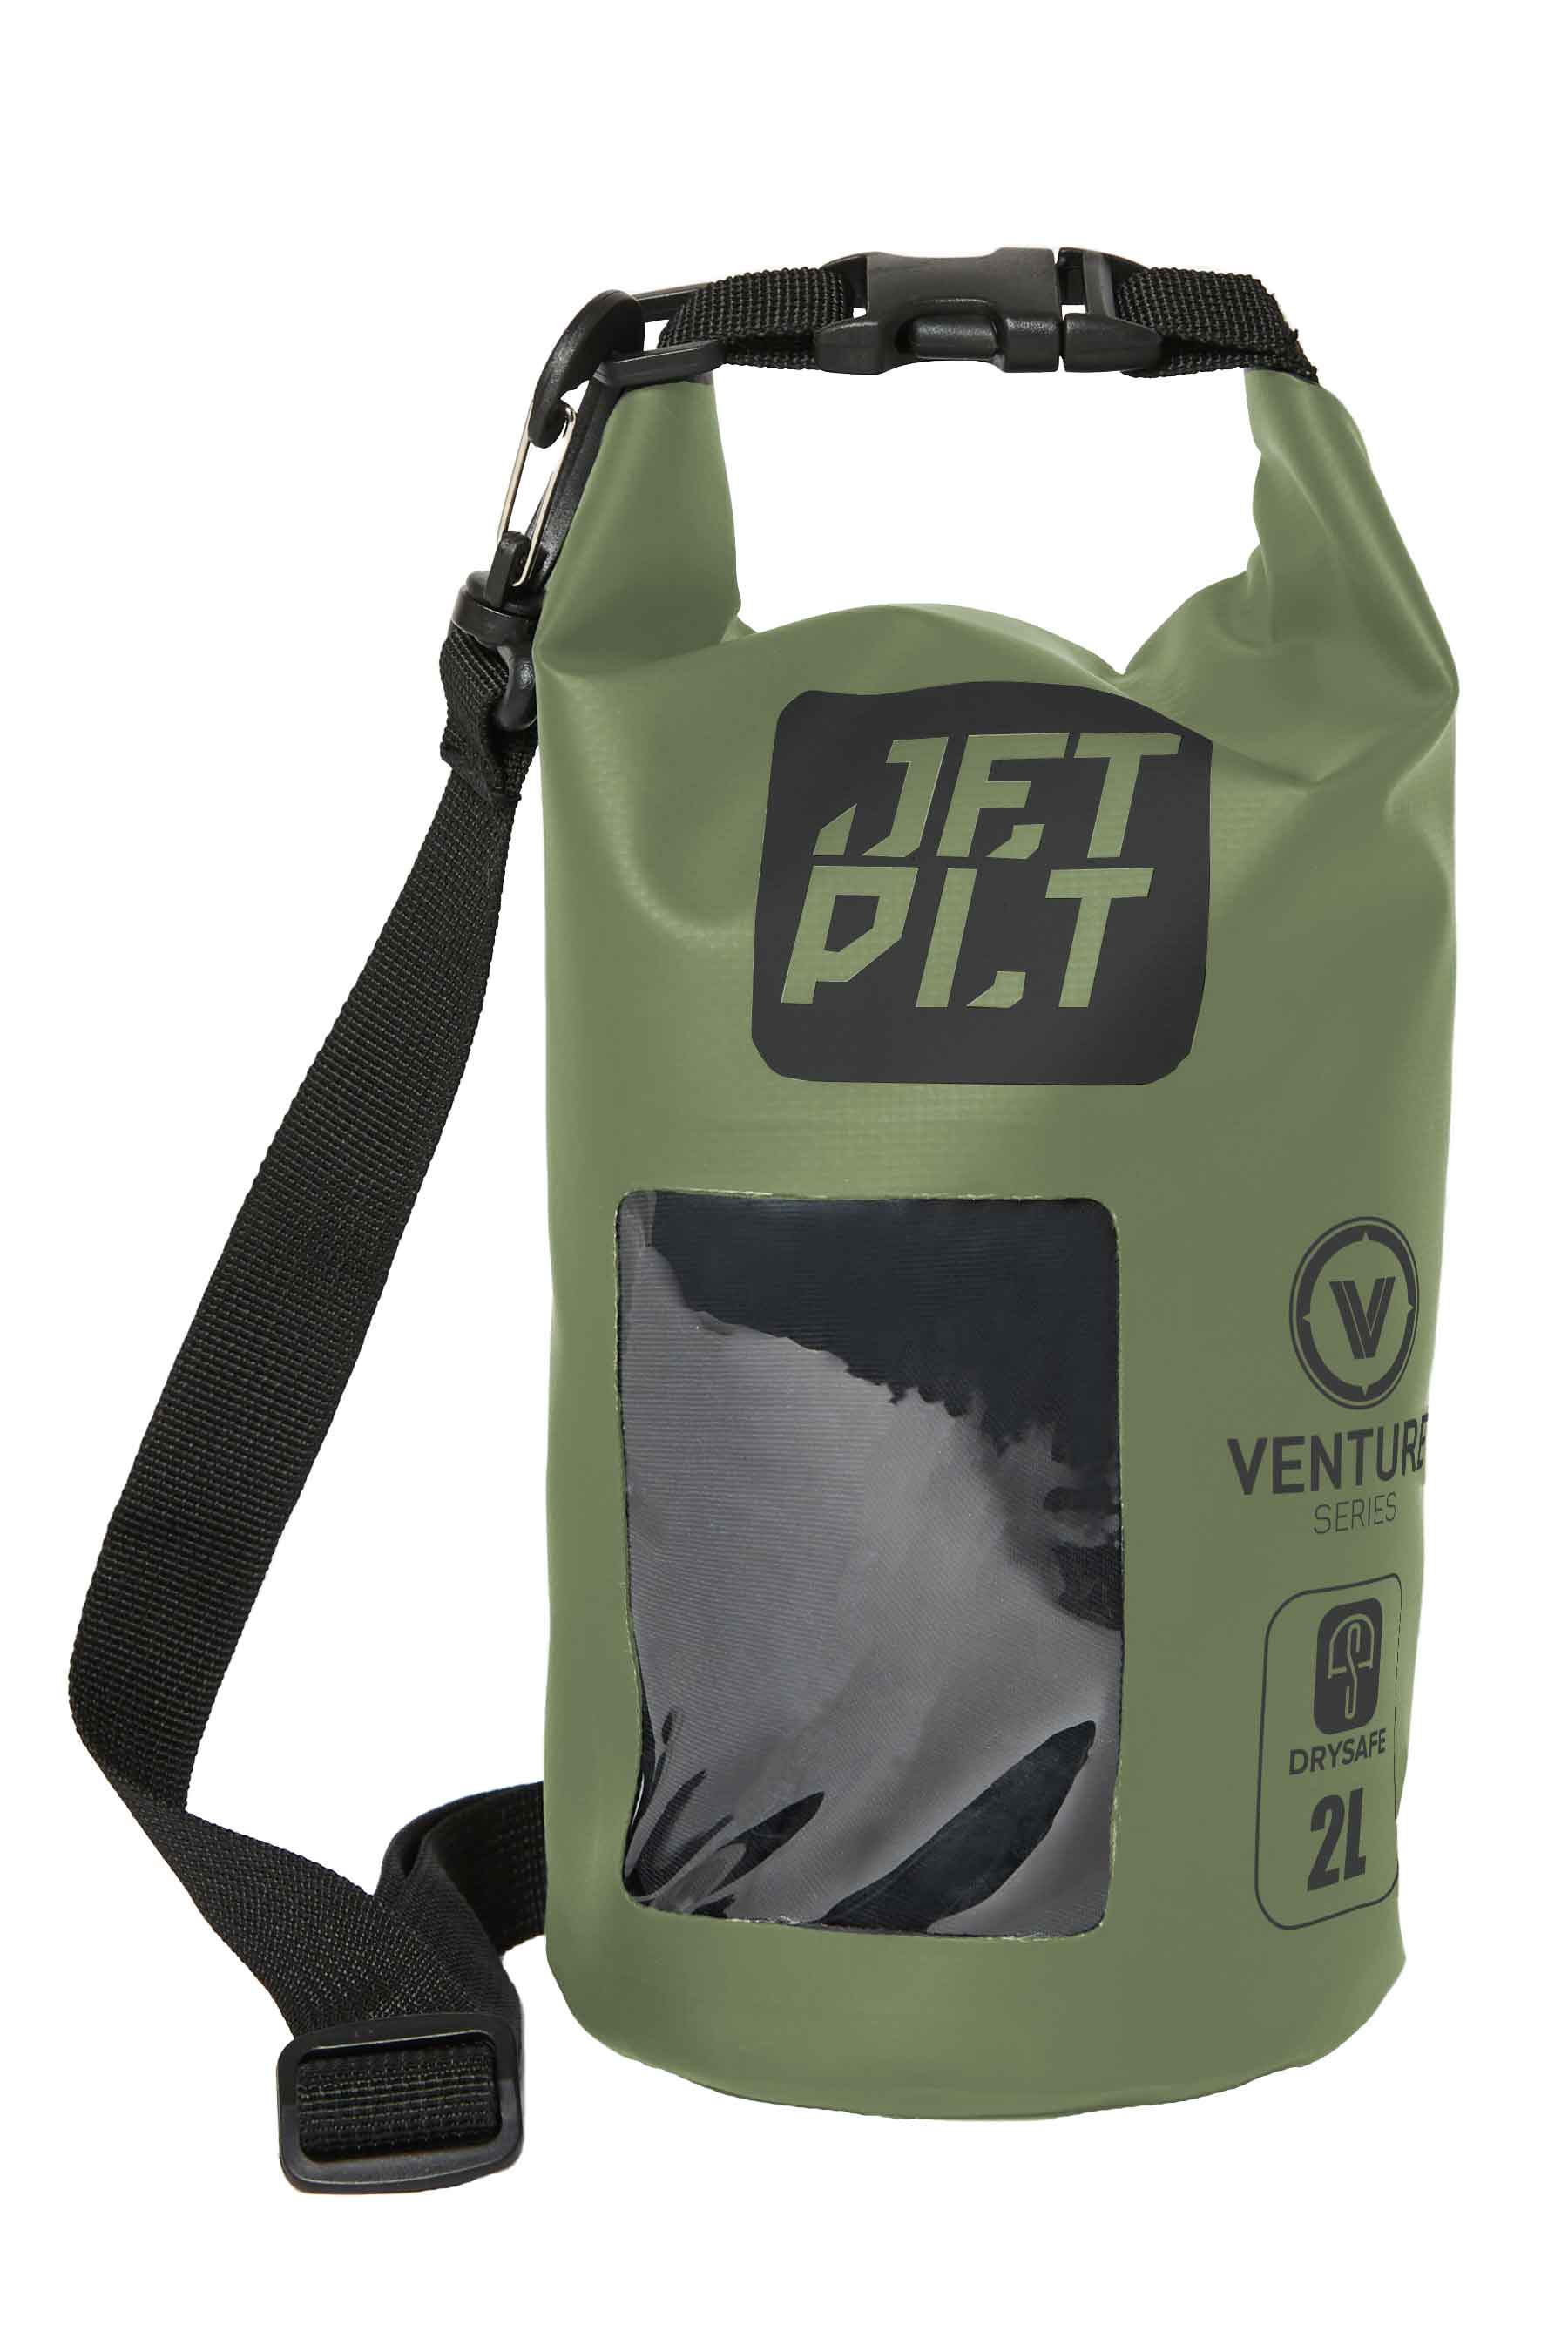  Jet Ski Dry Bag